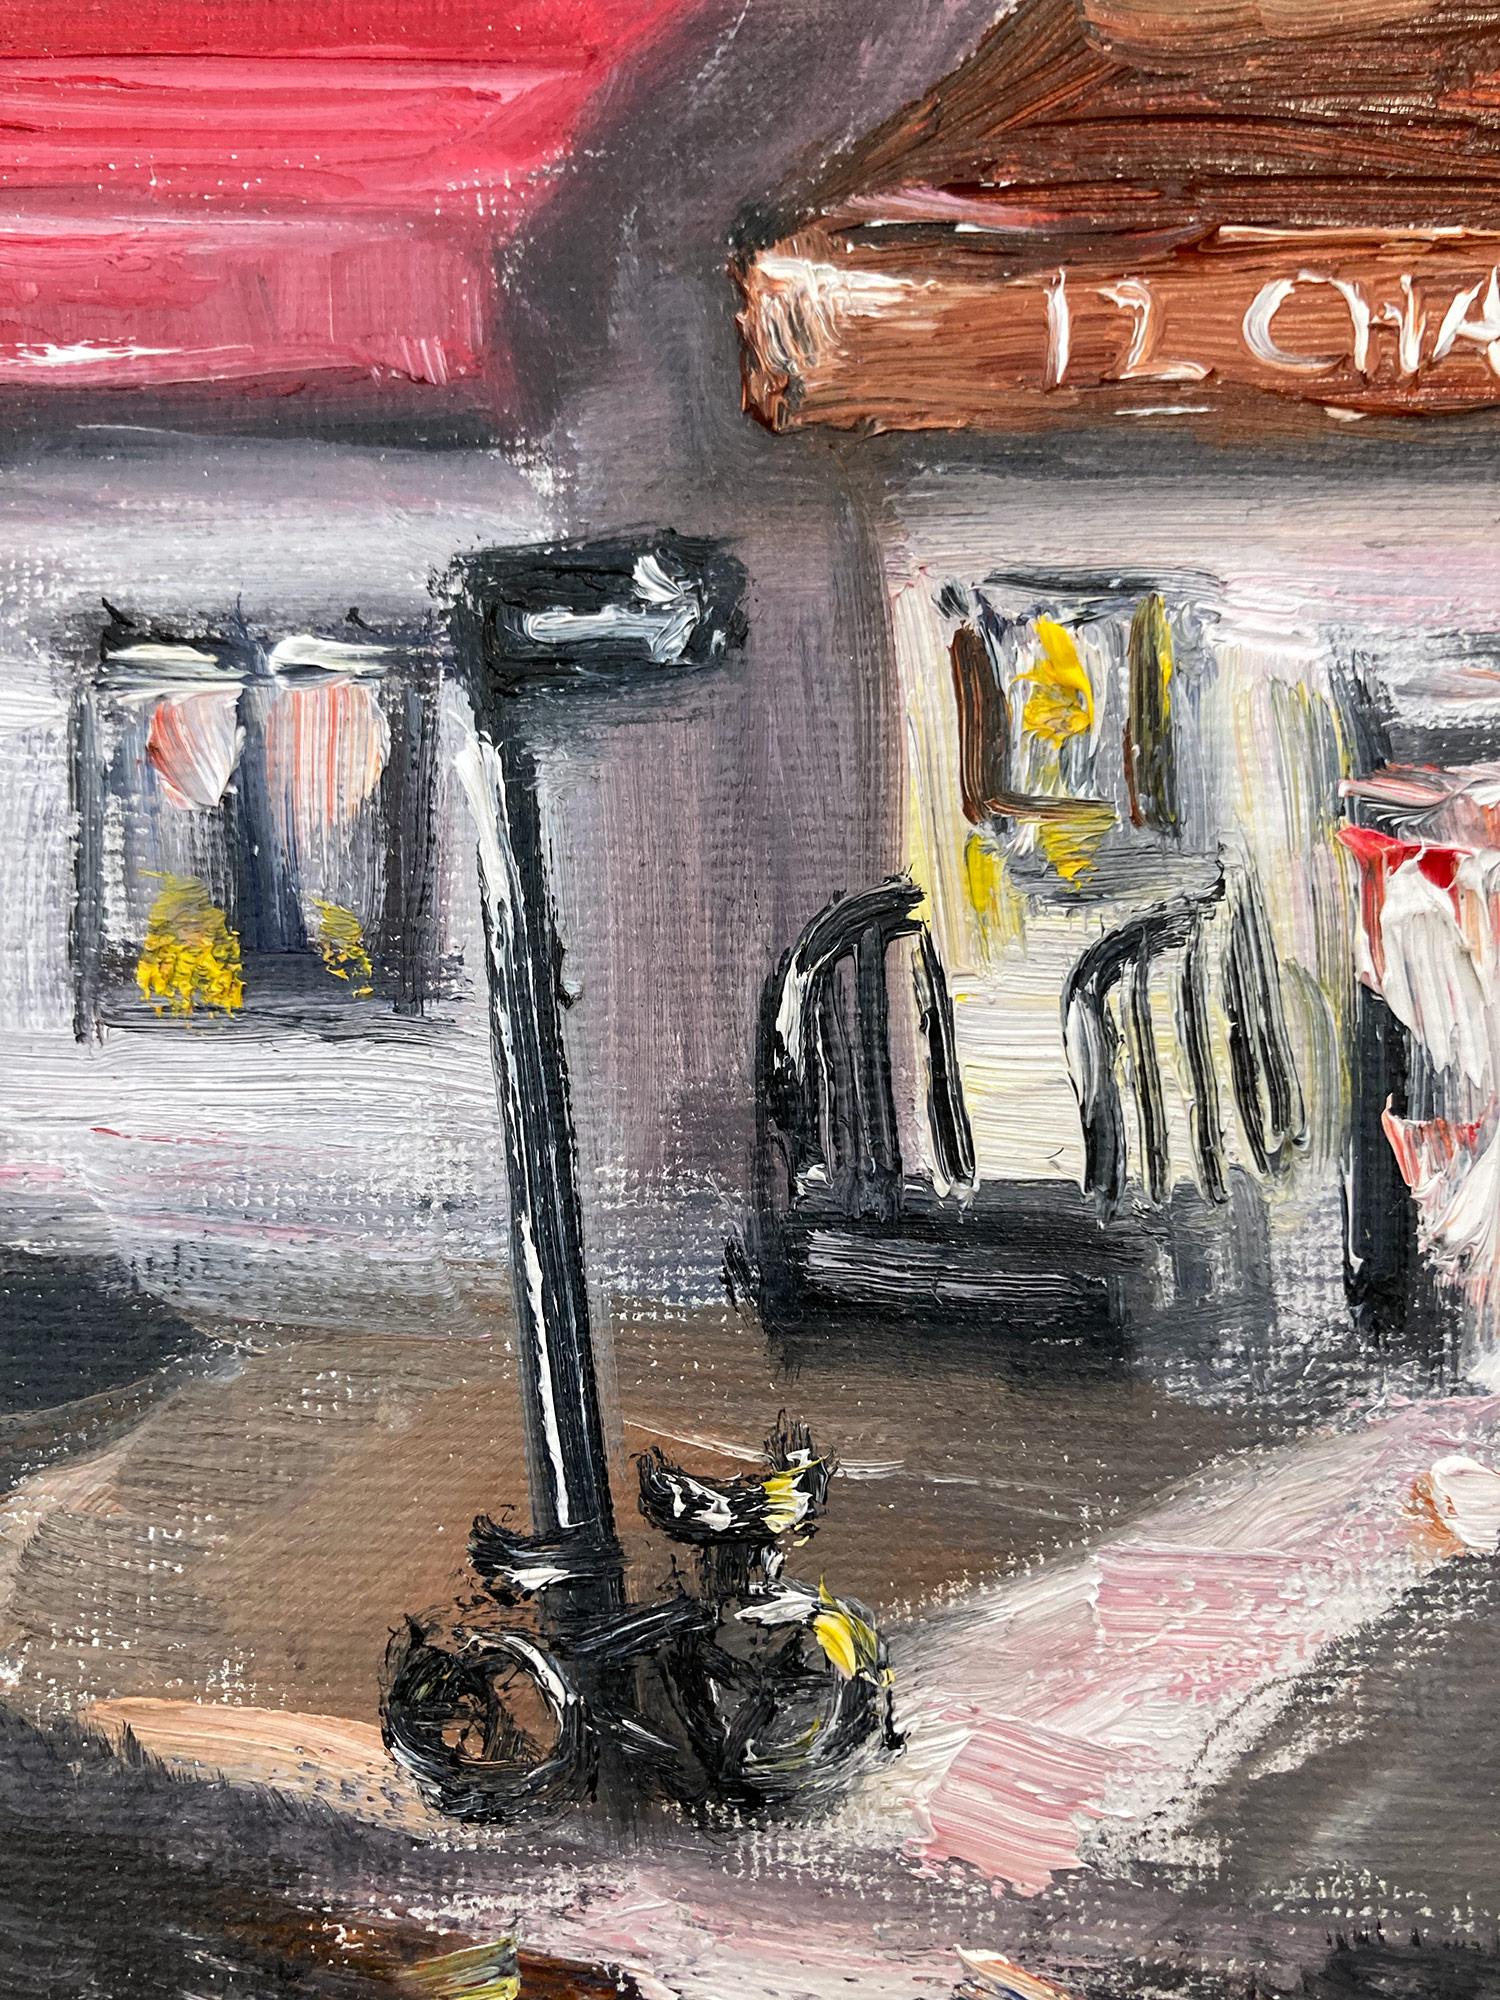 „Brunch at 12 Chairs“, Plein Air Restaurant, Ölgemälde in Soho, New York City – Painting von Cindy Shaoul